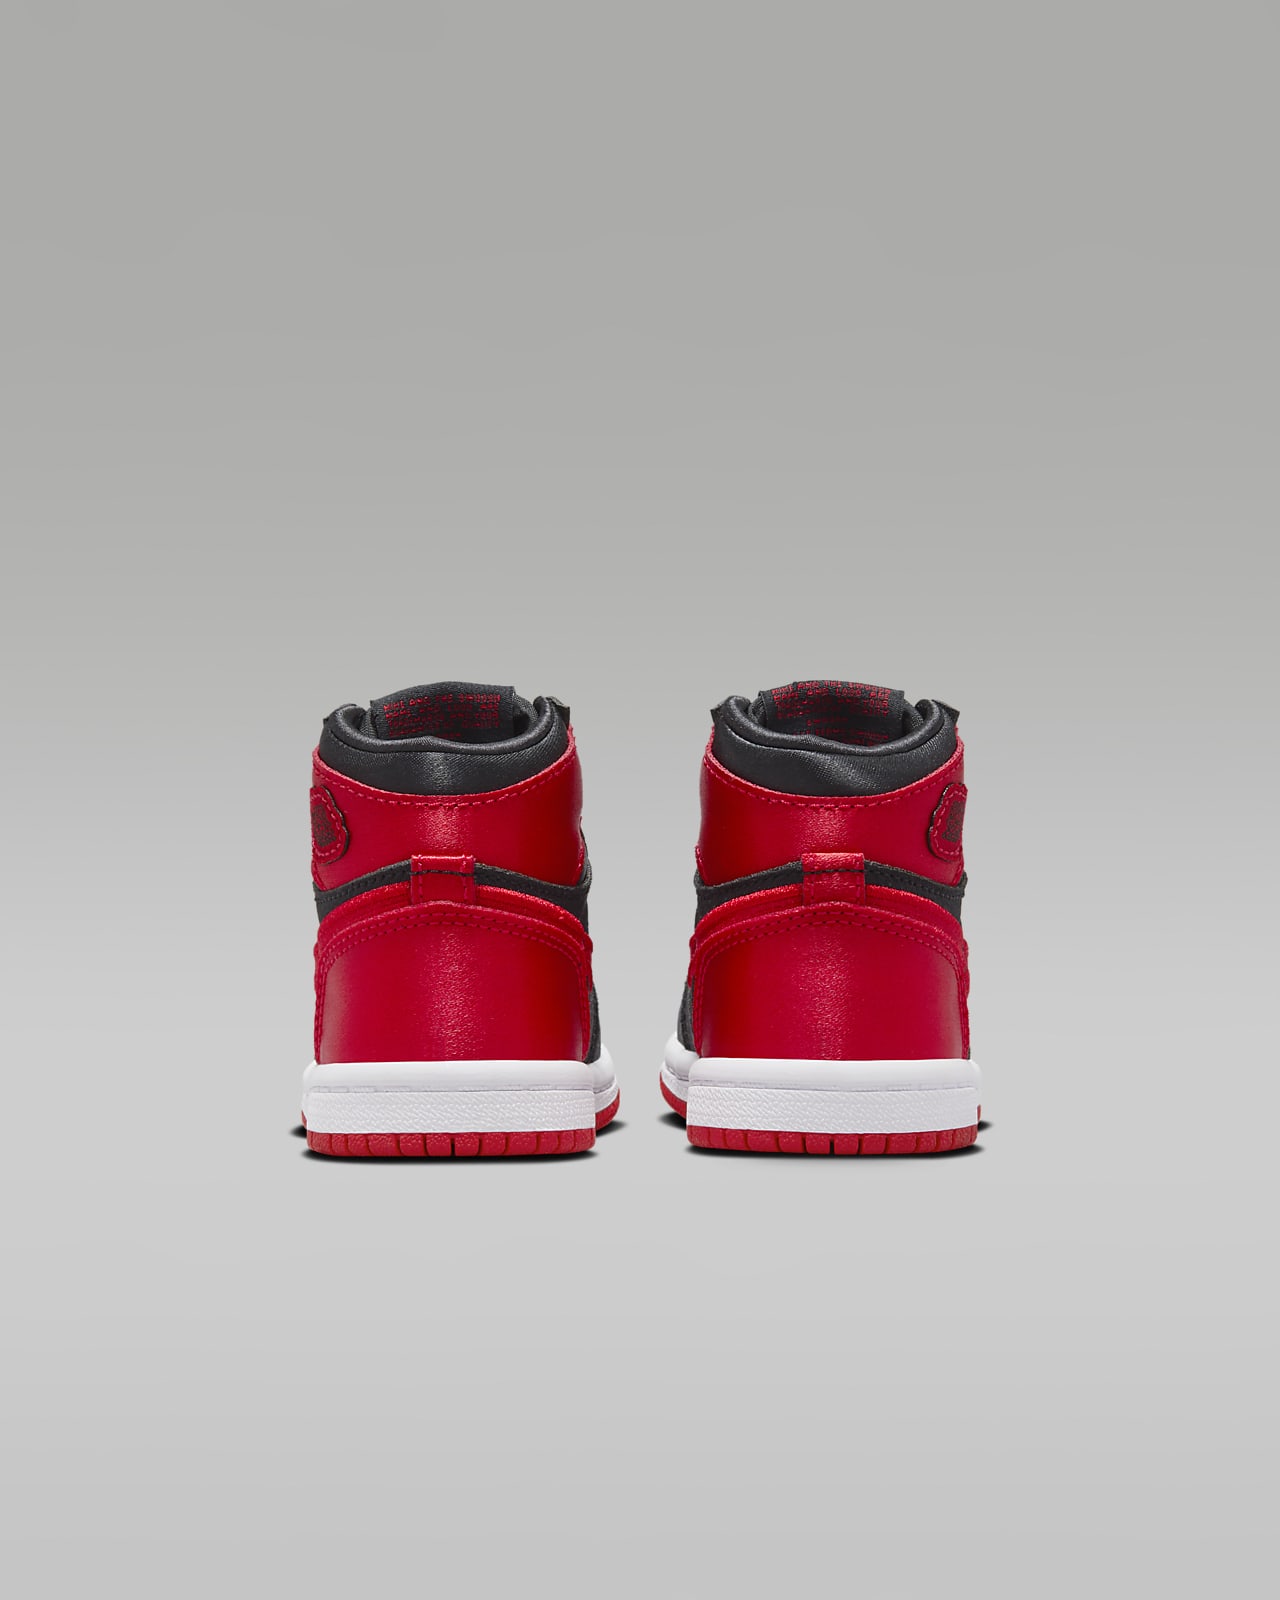 Chaussure Jordan 1 Retro High OG pour enfant. Nike LU